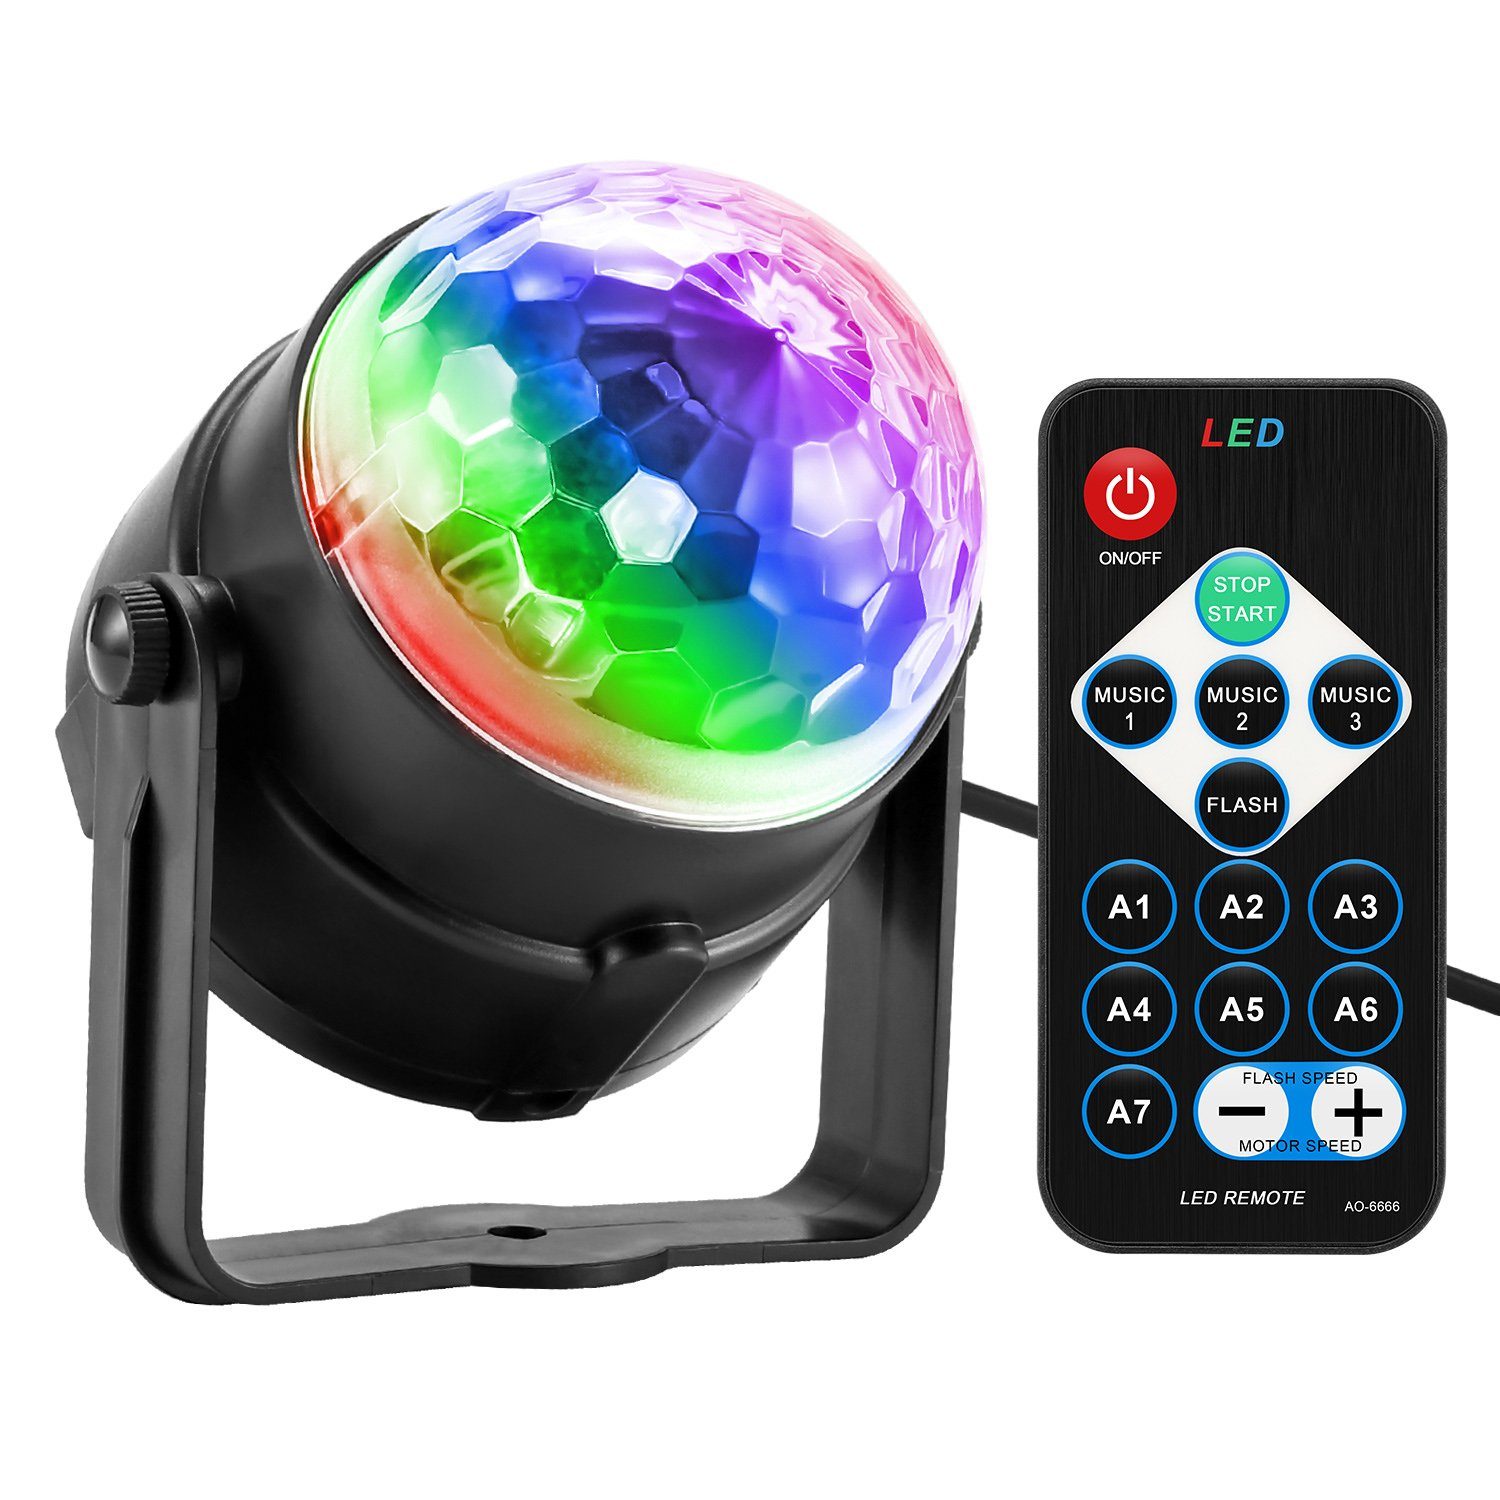 LED Discokugel Party Licht Musikgesteuert Discolicht 16 Farben Projektionslampe 